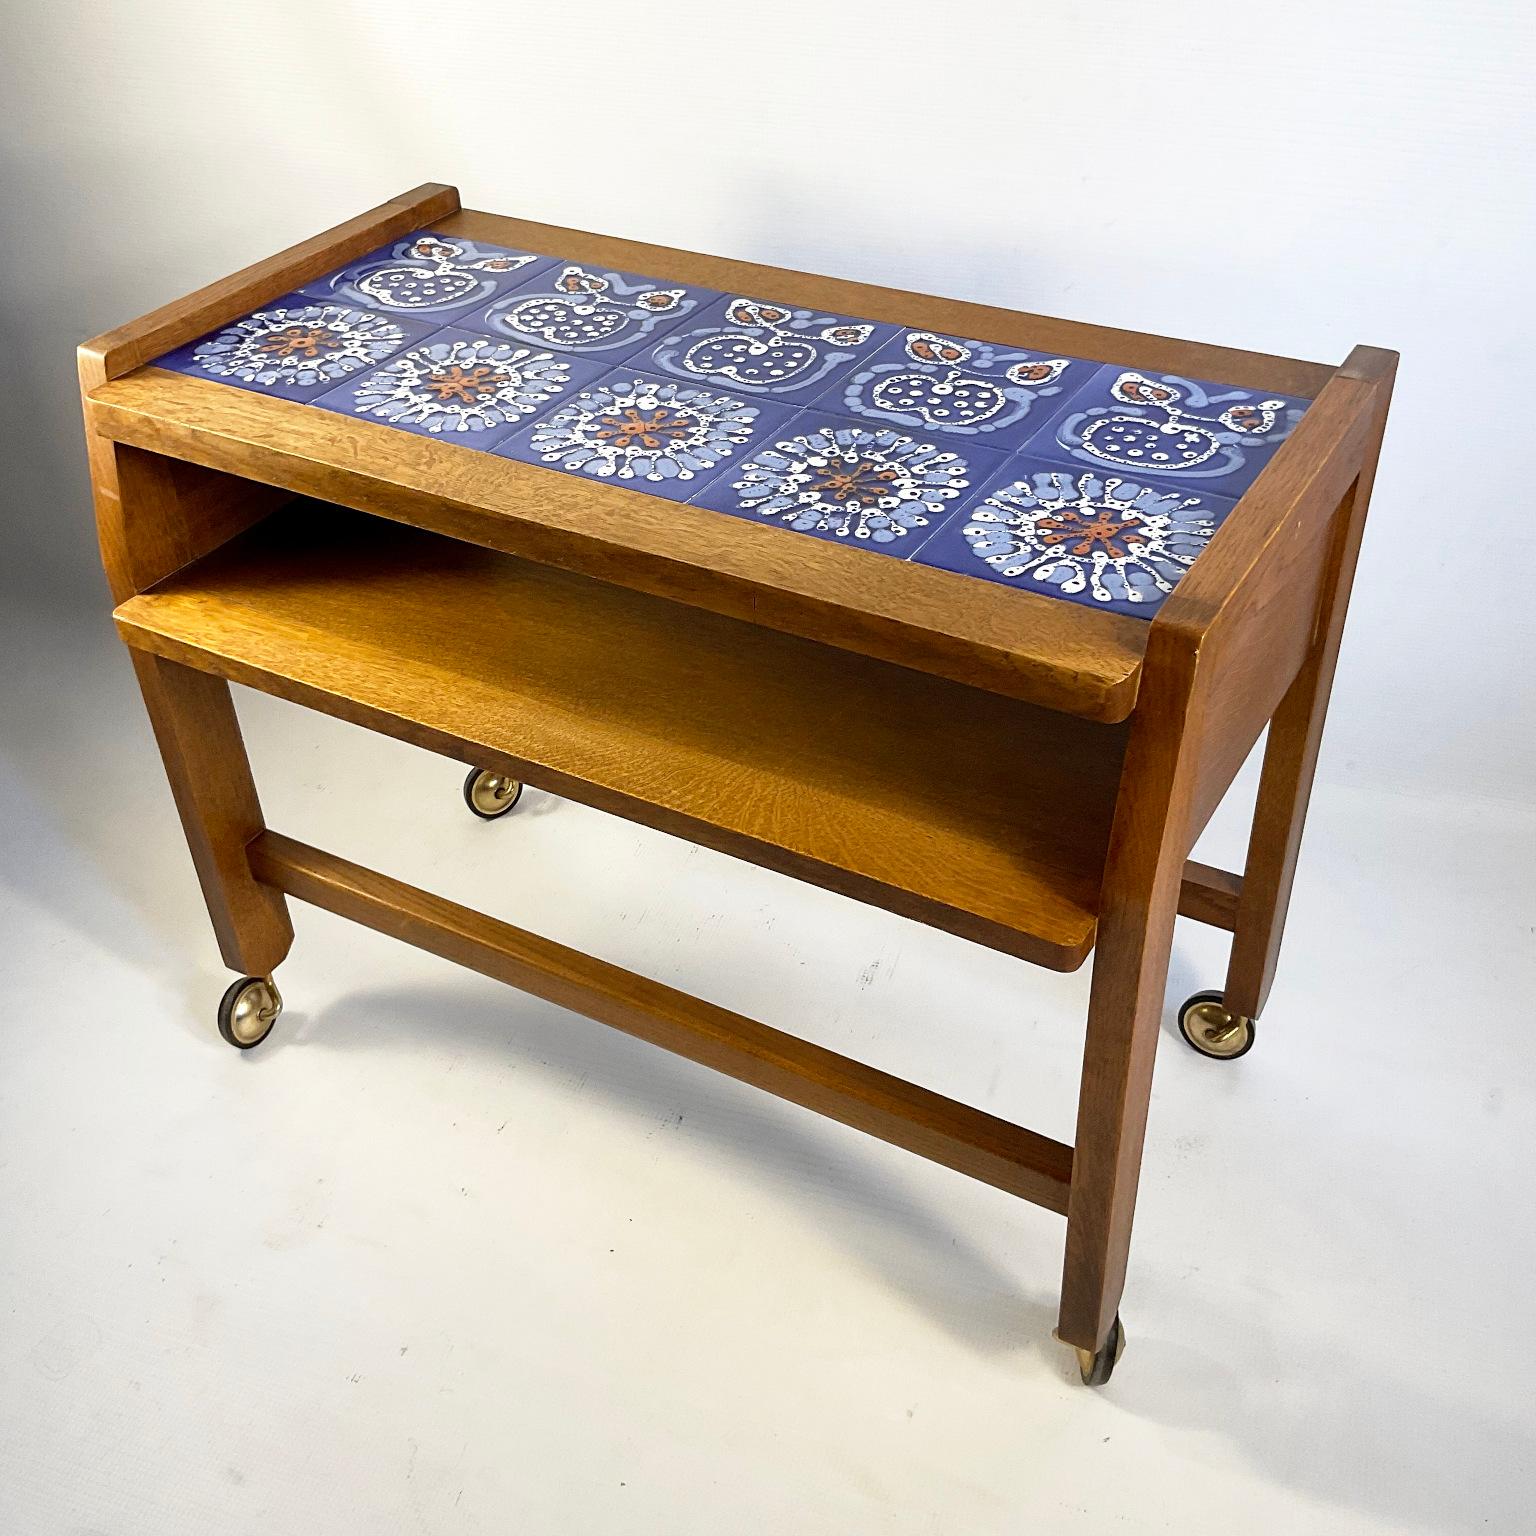 1960s Guillerme et Chambron Oak Side Table with Blue Ceramics Tiles Top For Sale 5